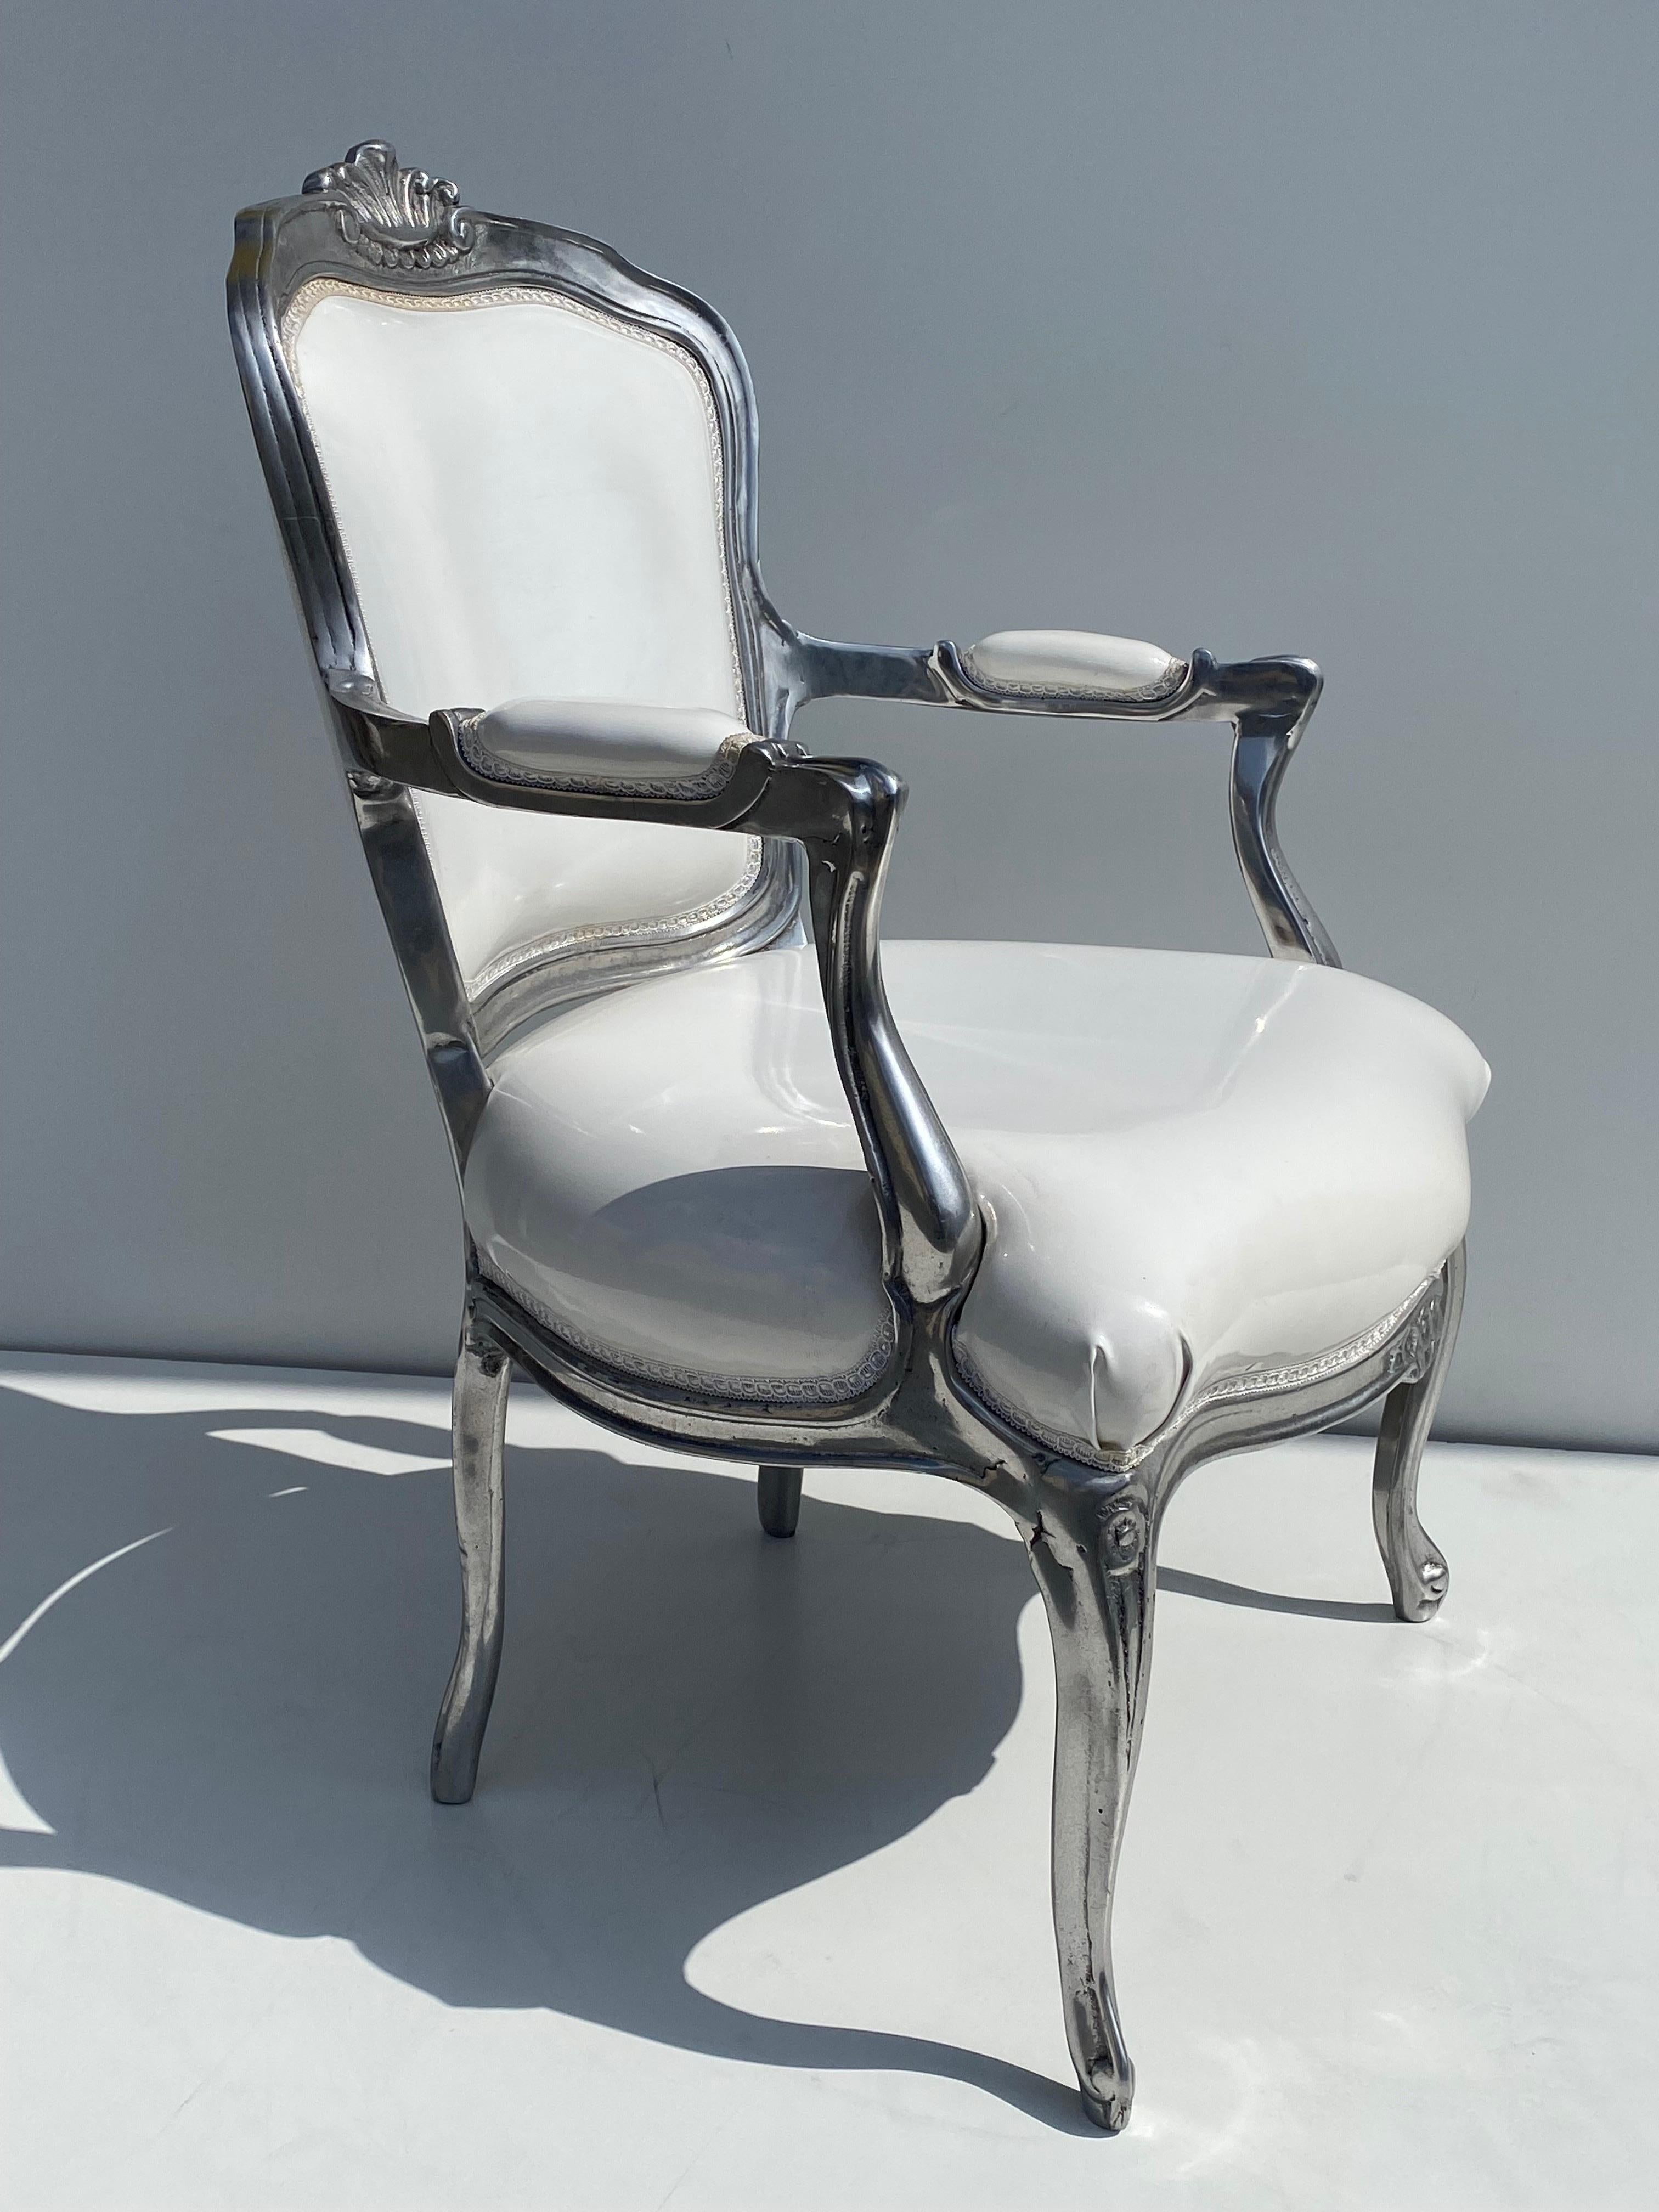 Solid cast aluminum Italian bergere chair in white vinyl.